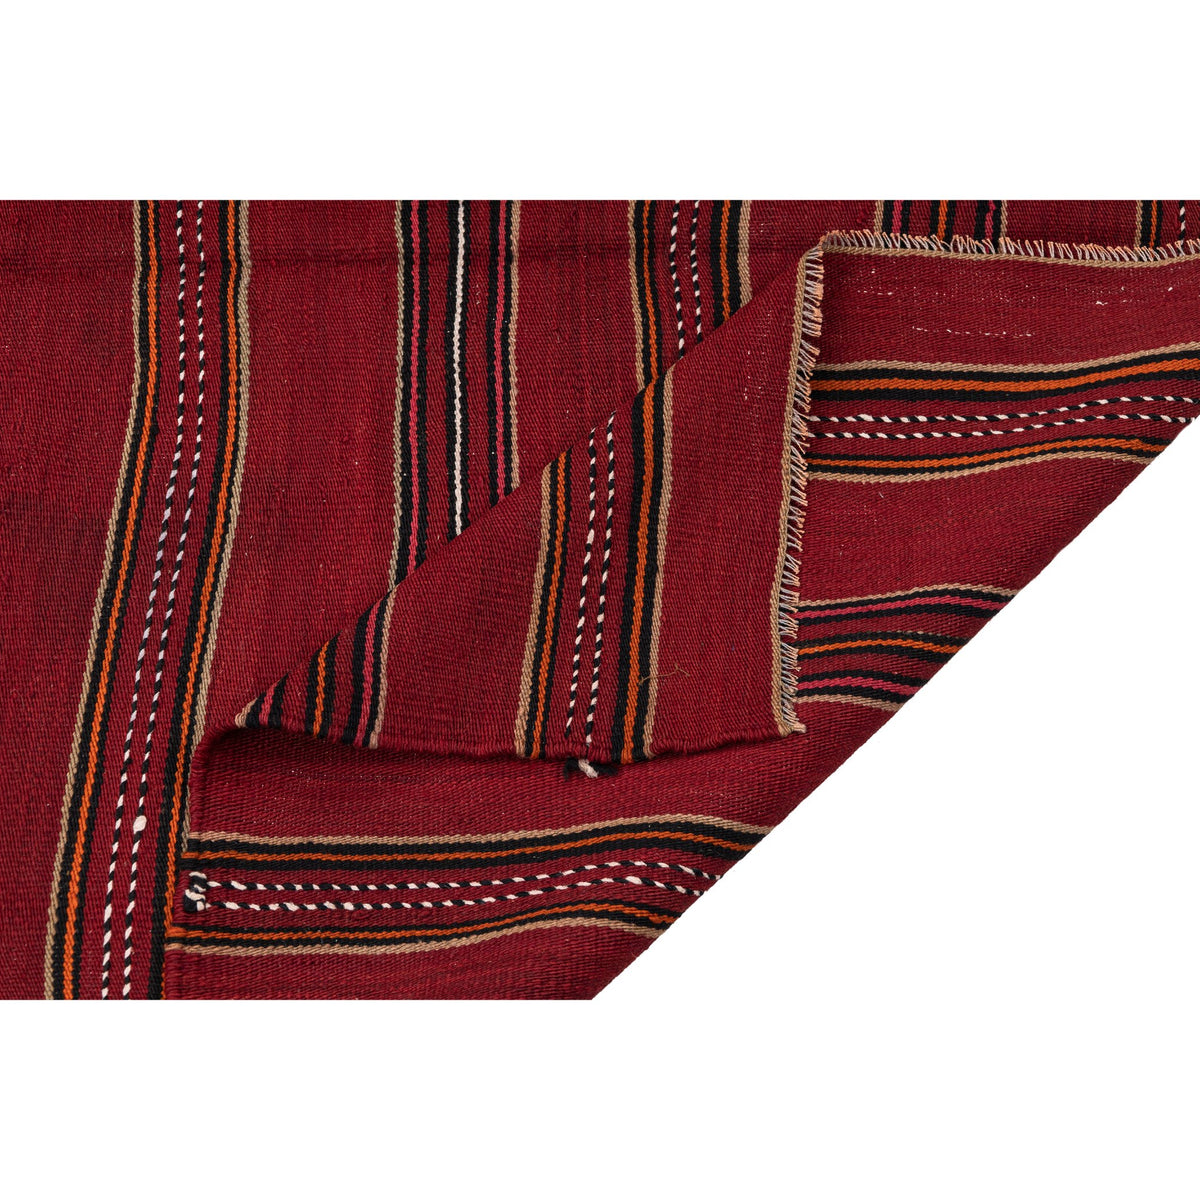 - (5' x 8'10'') Vintage Red Striped Kilim Rug